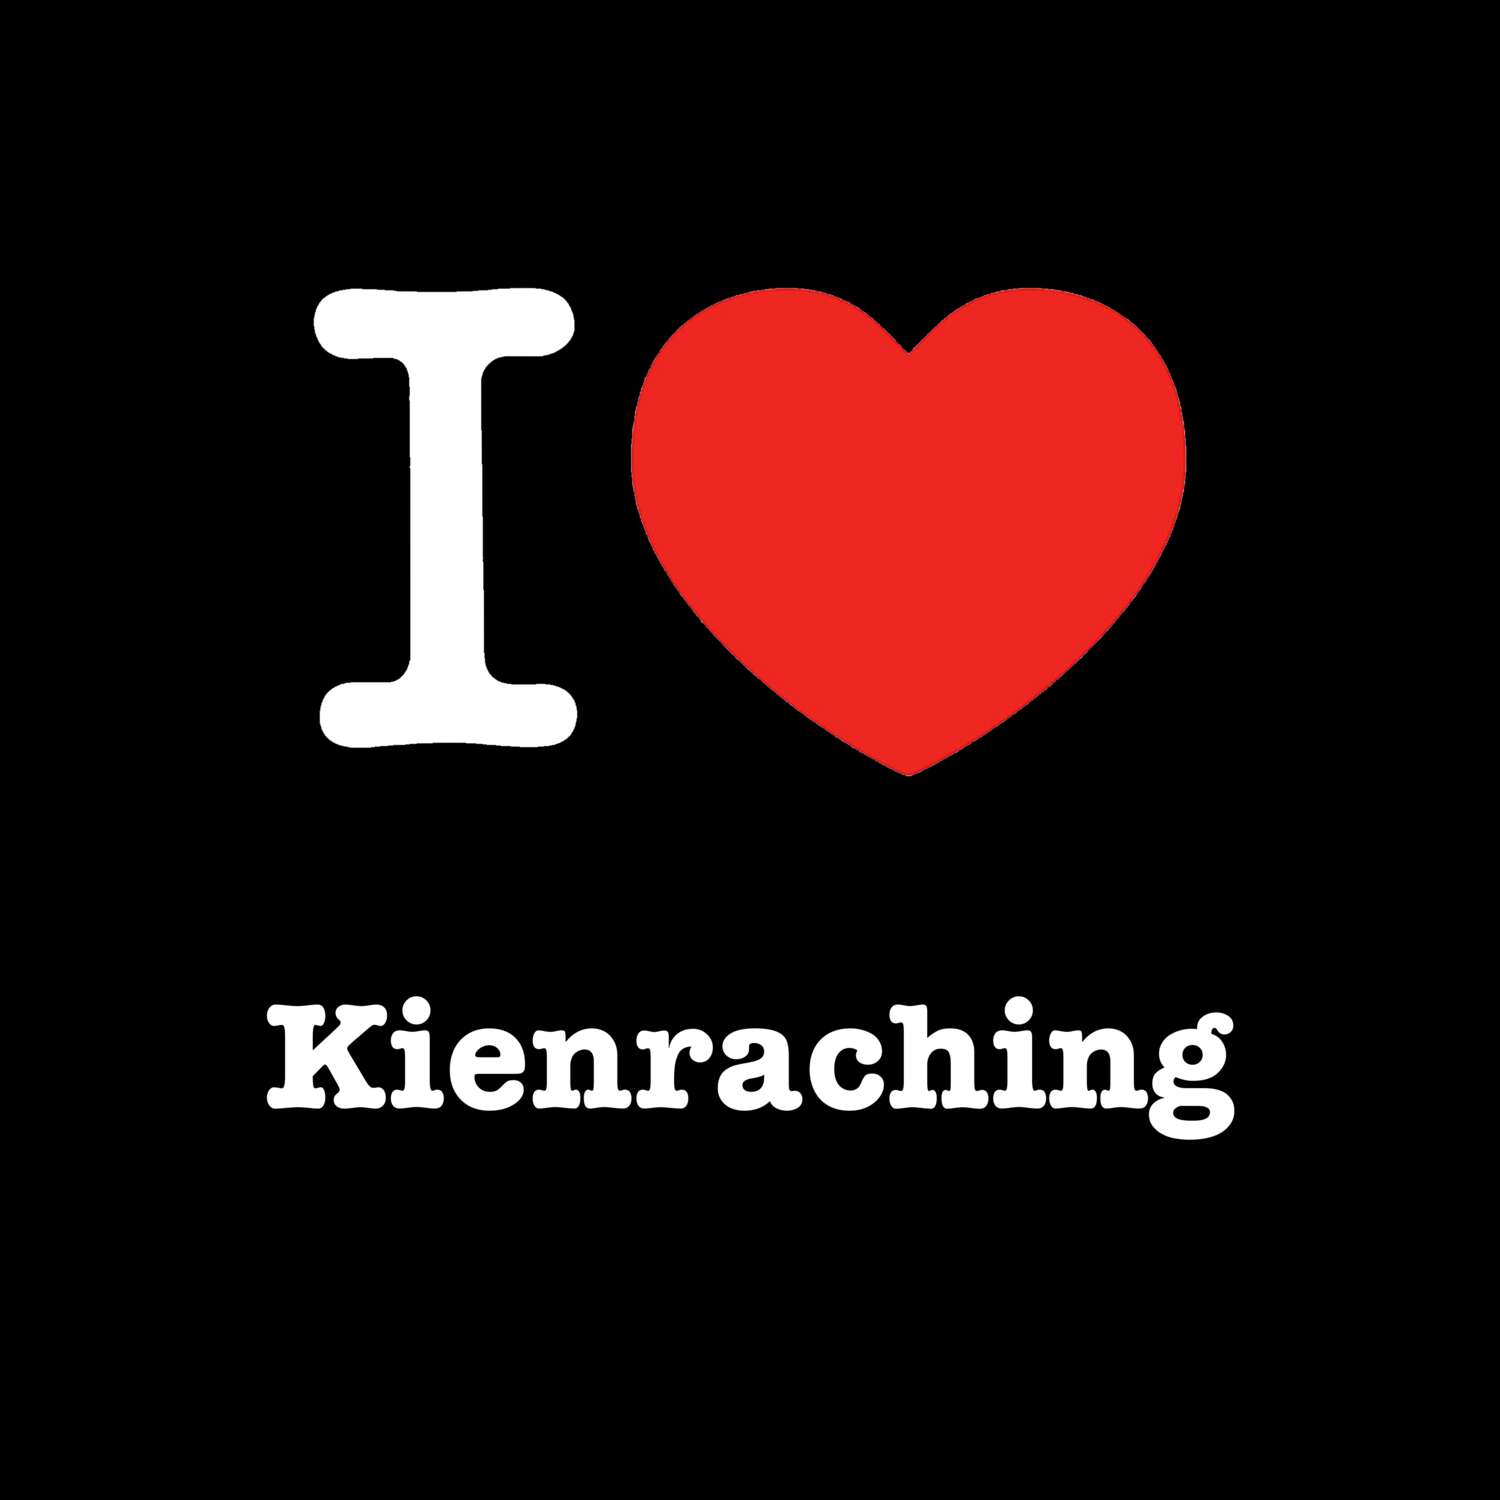 Kienraching T-Shirt »I love«